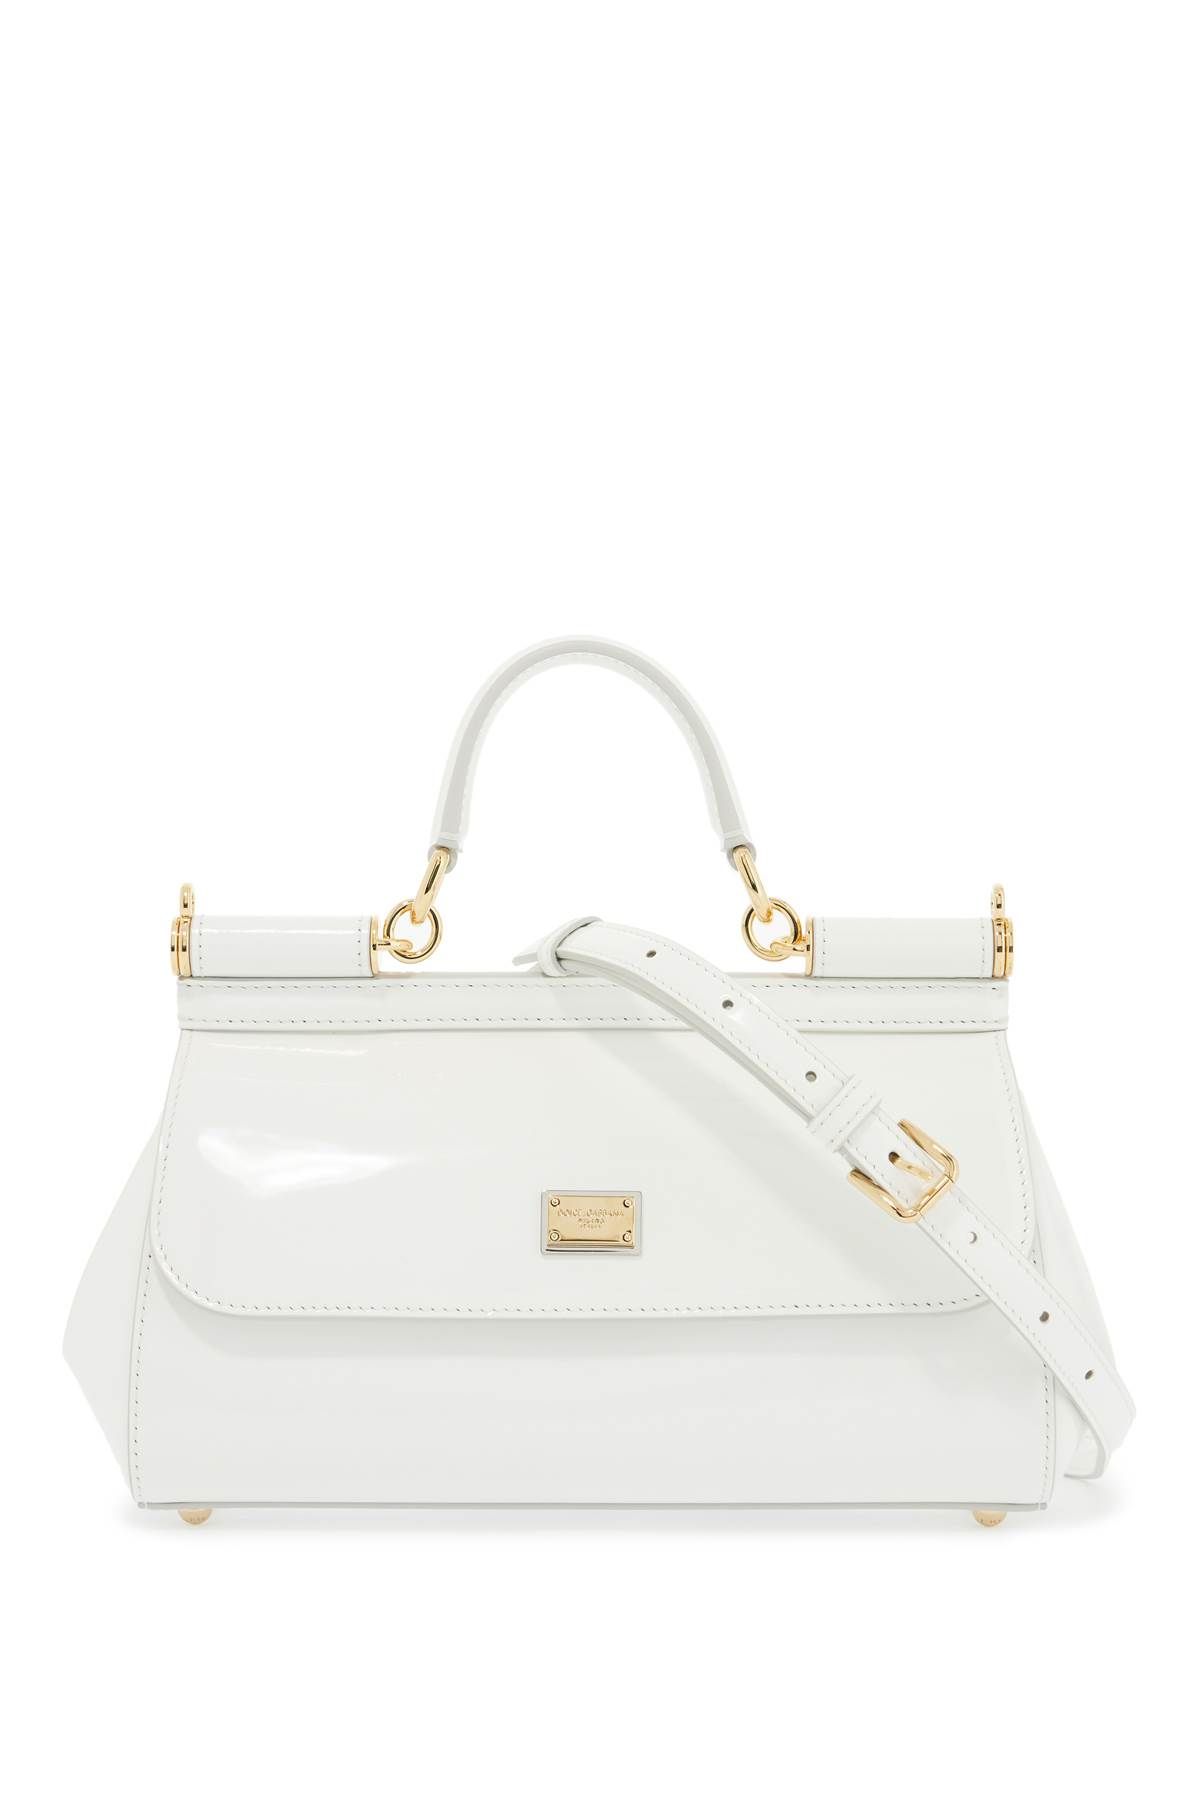 Dolce & Gabbana DOLCE & GABBANA extended sicily handbag with elong